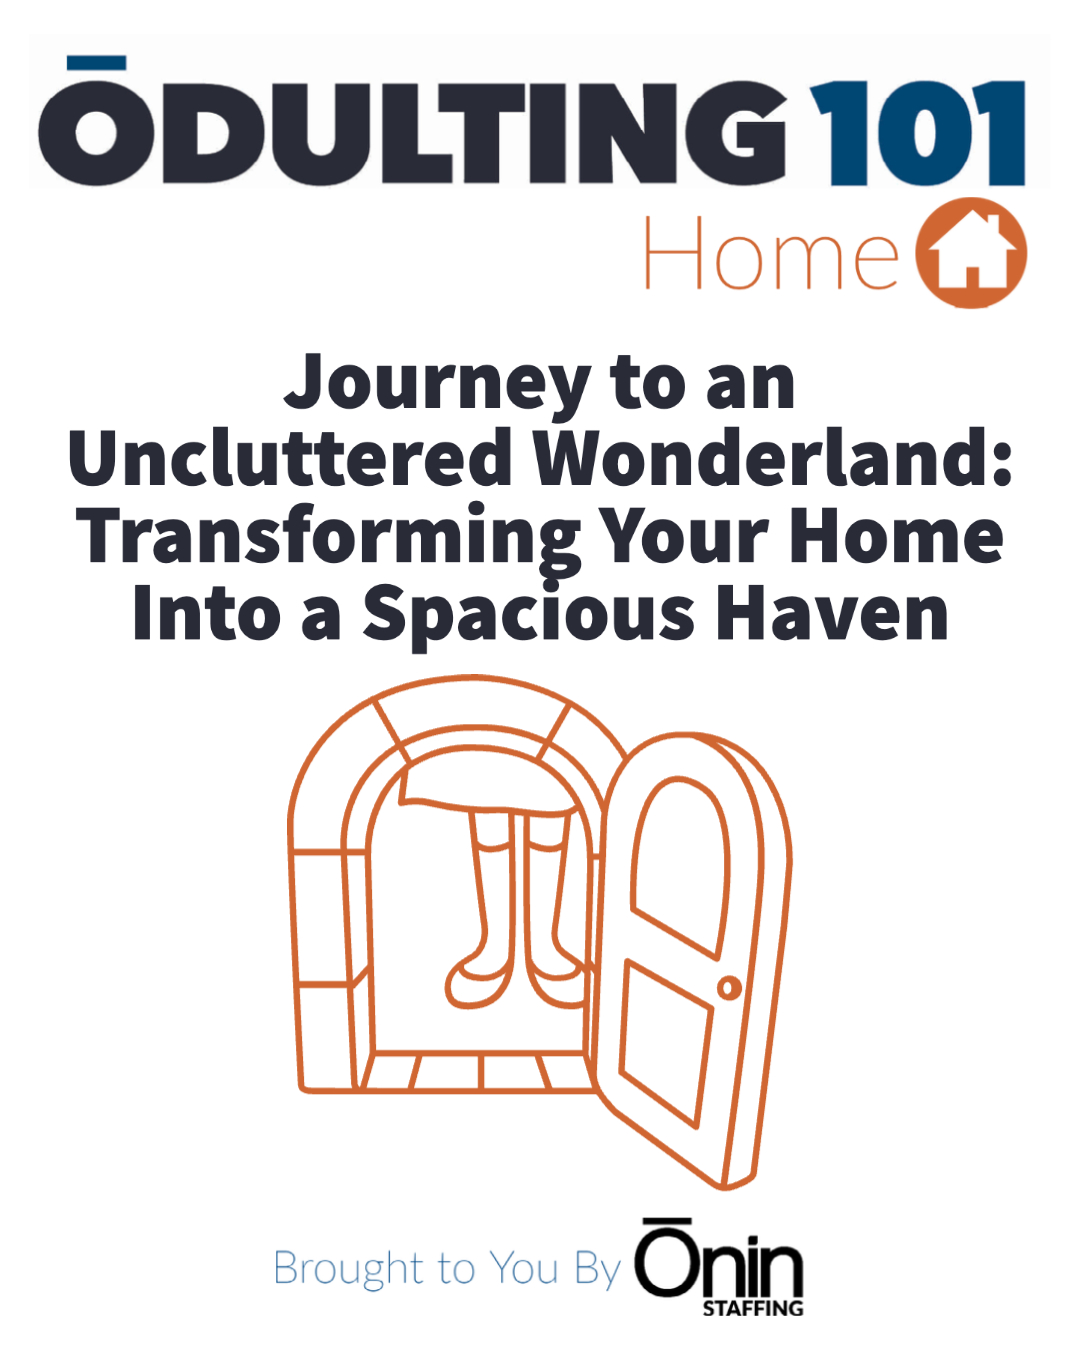 Alice-inspired image, "Odulting: Home - Journey to an Uncluttered Wonderland," Onin Staffing logo.